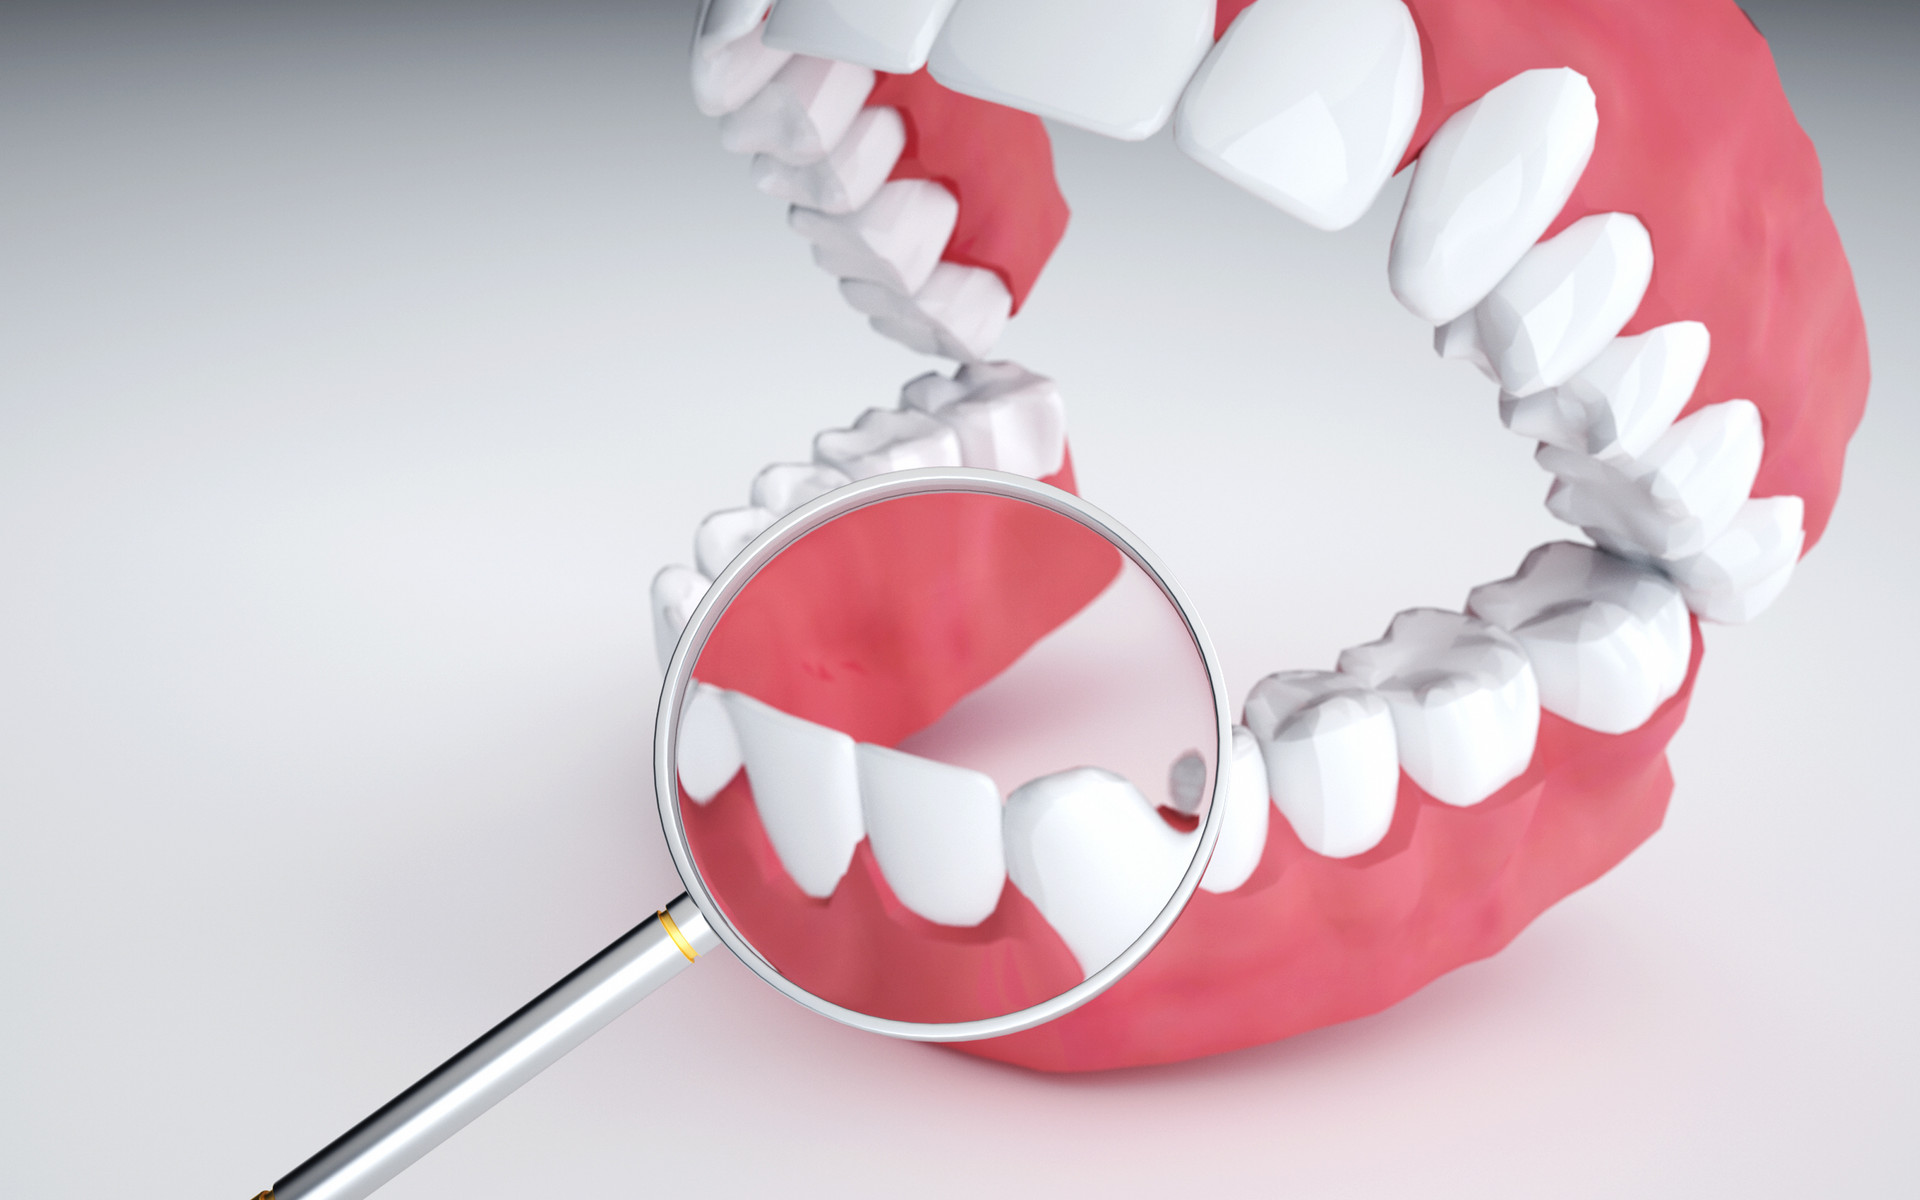 Clin Oral Investig：与传统香烟相比，电子烟对<font color="red">牙周组织</font>的影响较小，但是仍需警惕